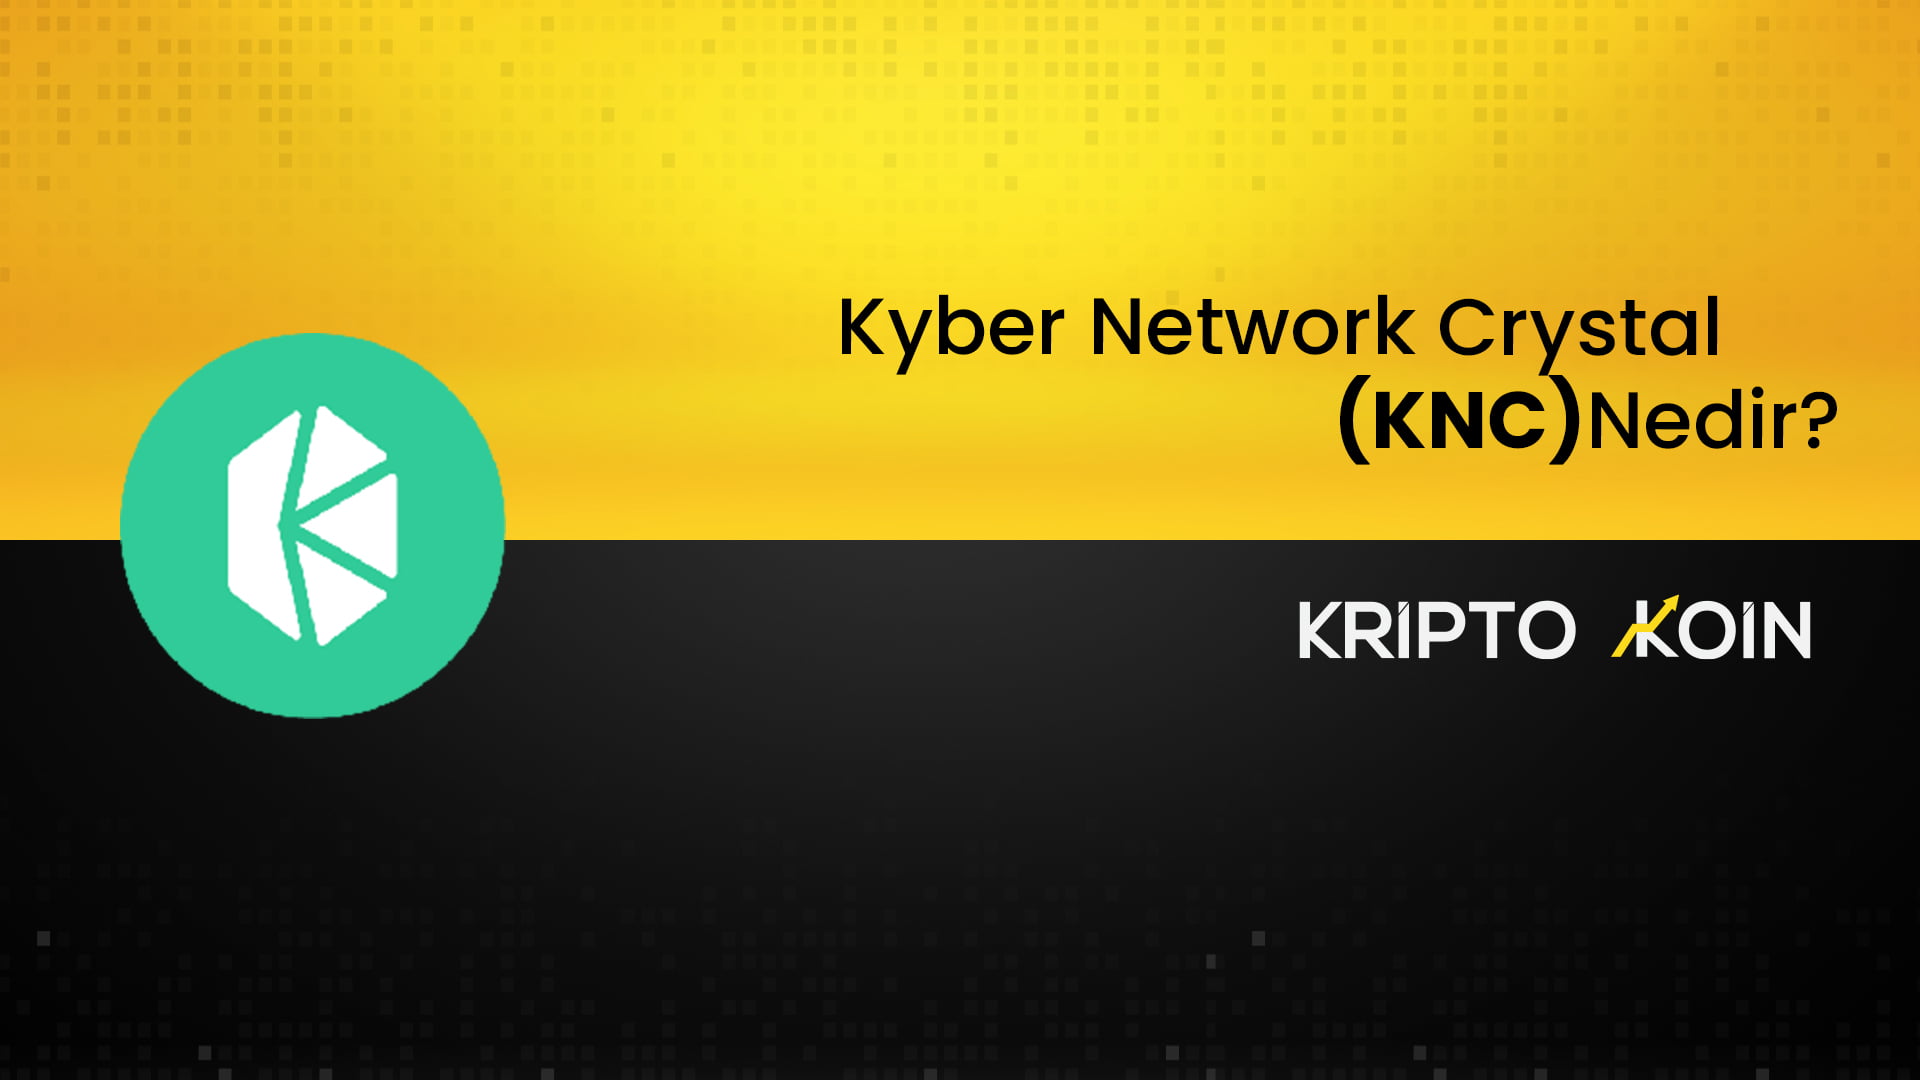 Kyber Network Crystal